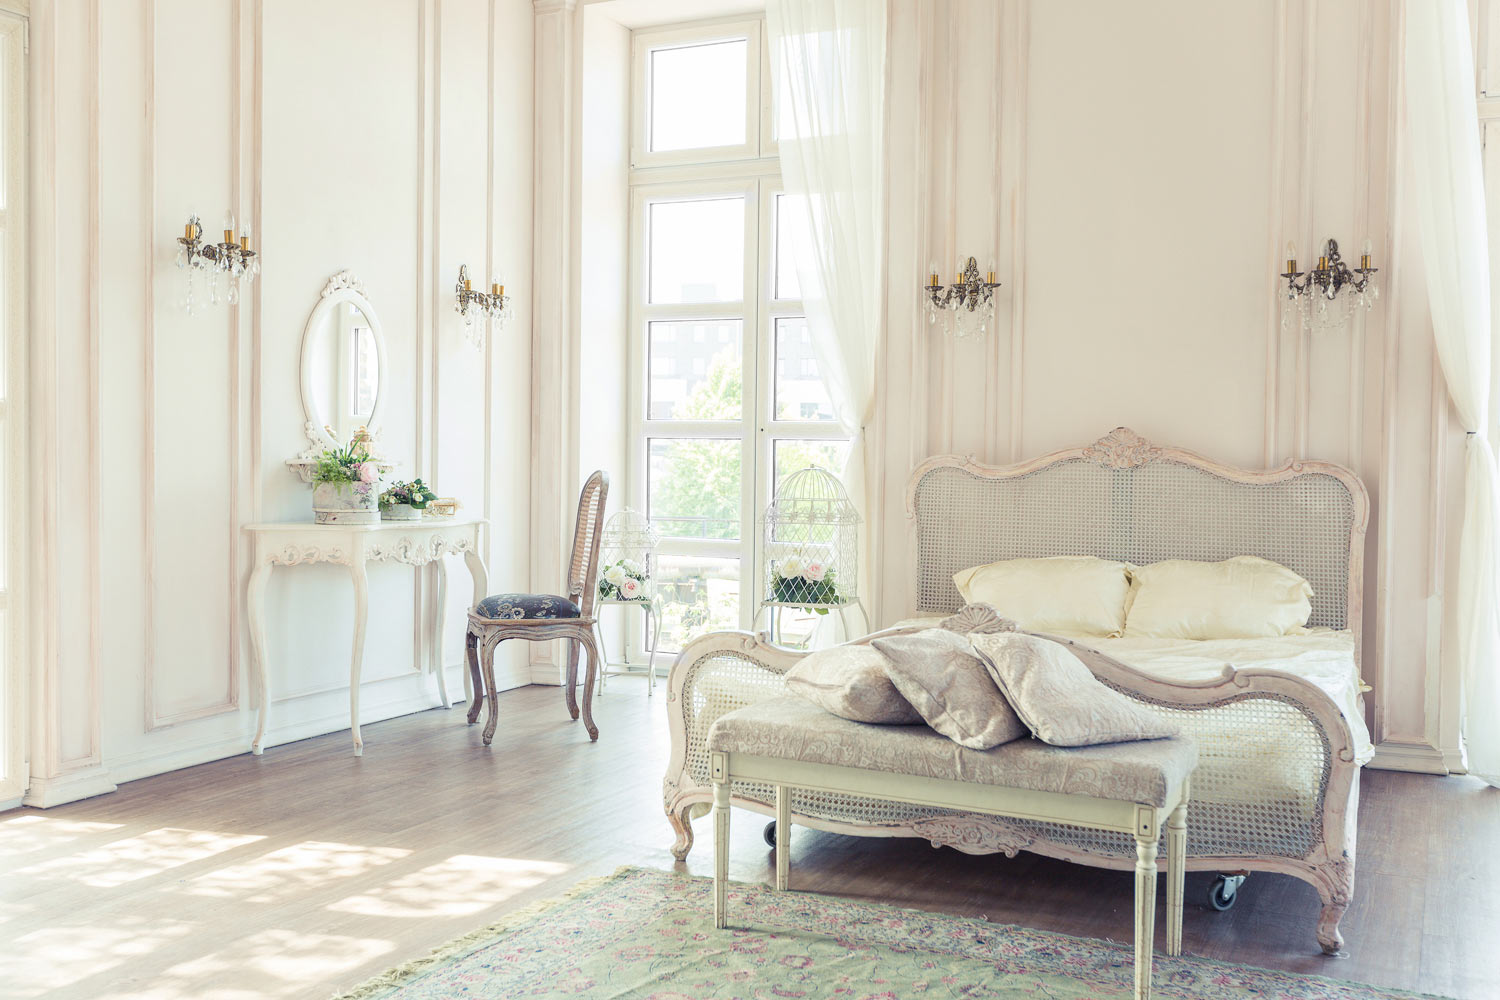 70 French interior design